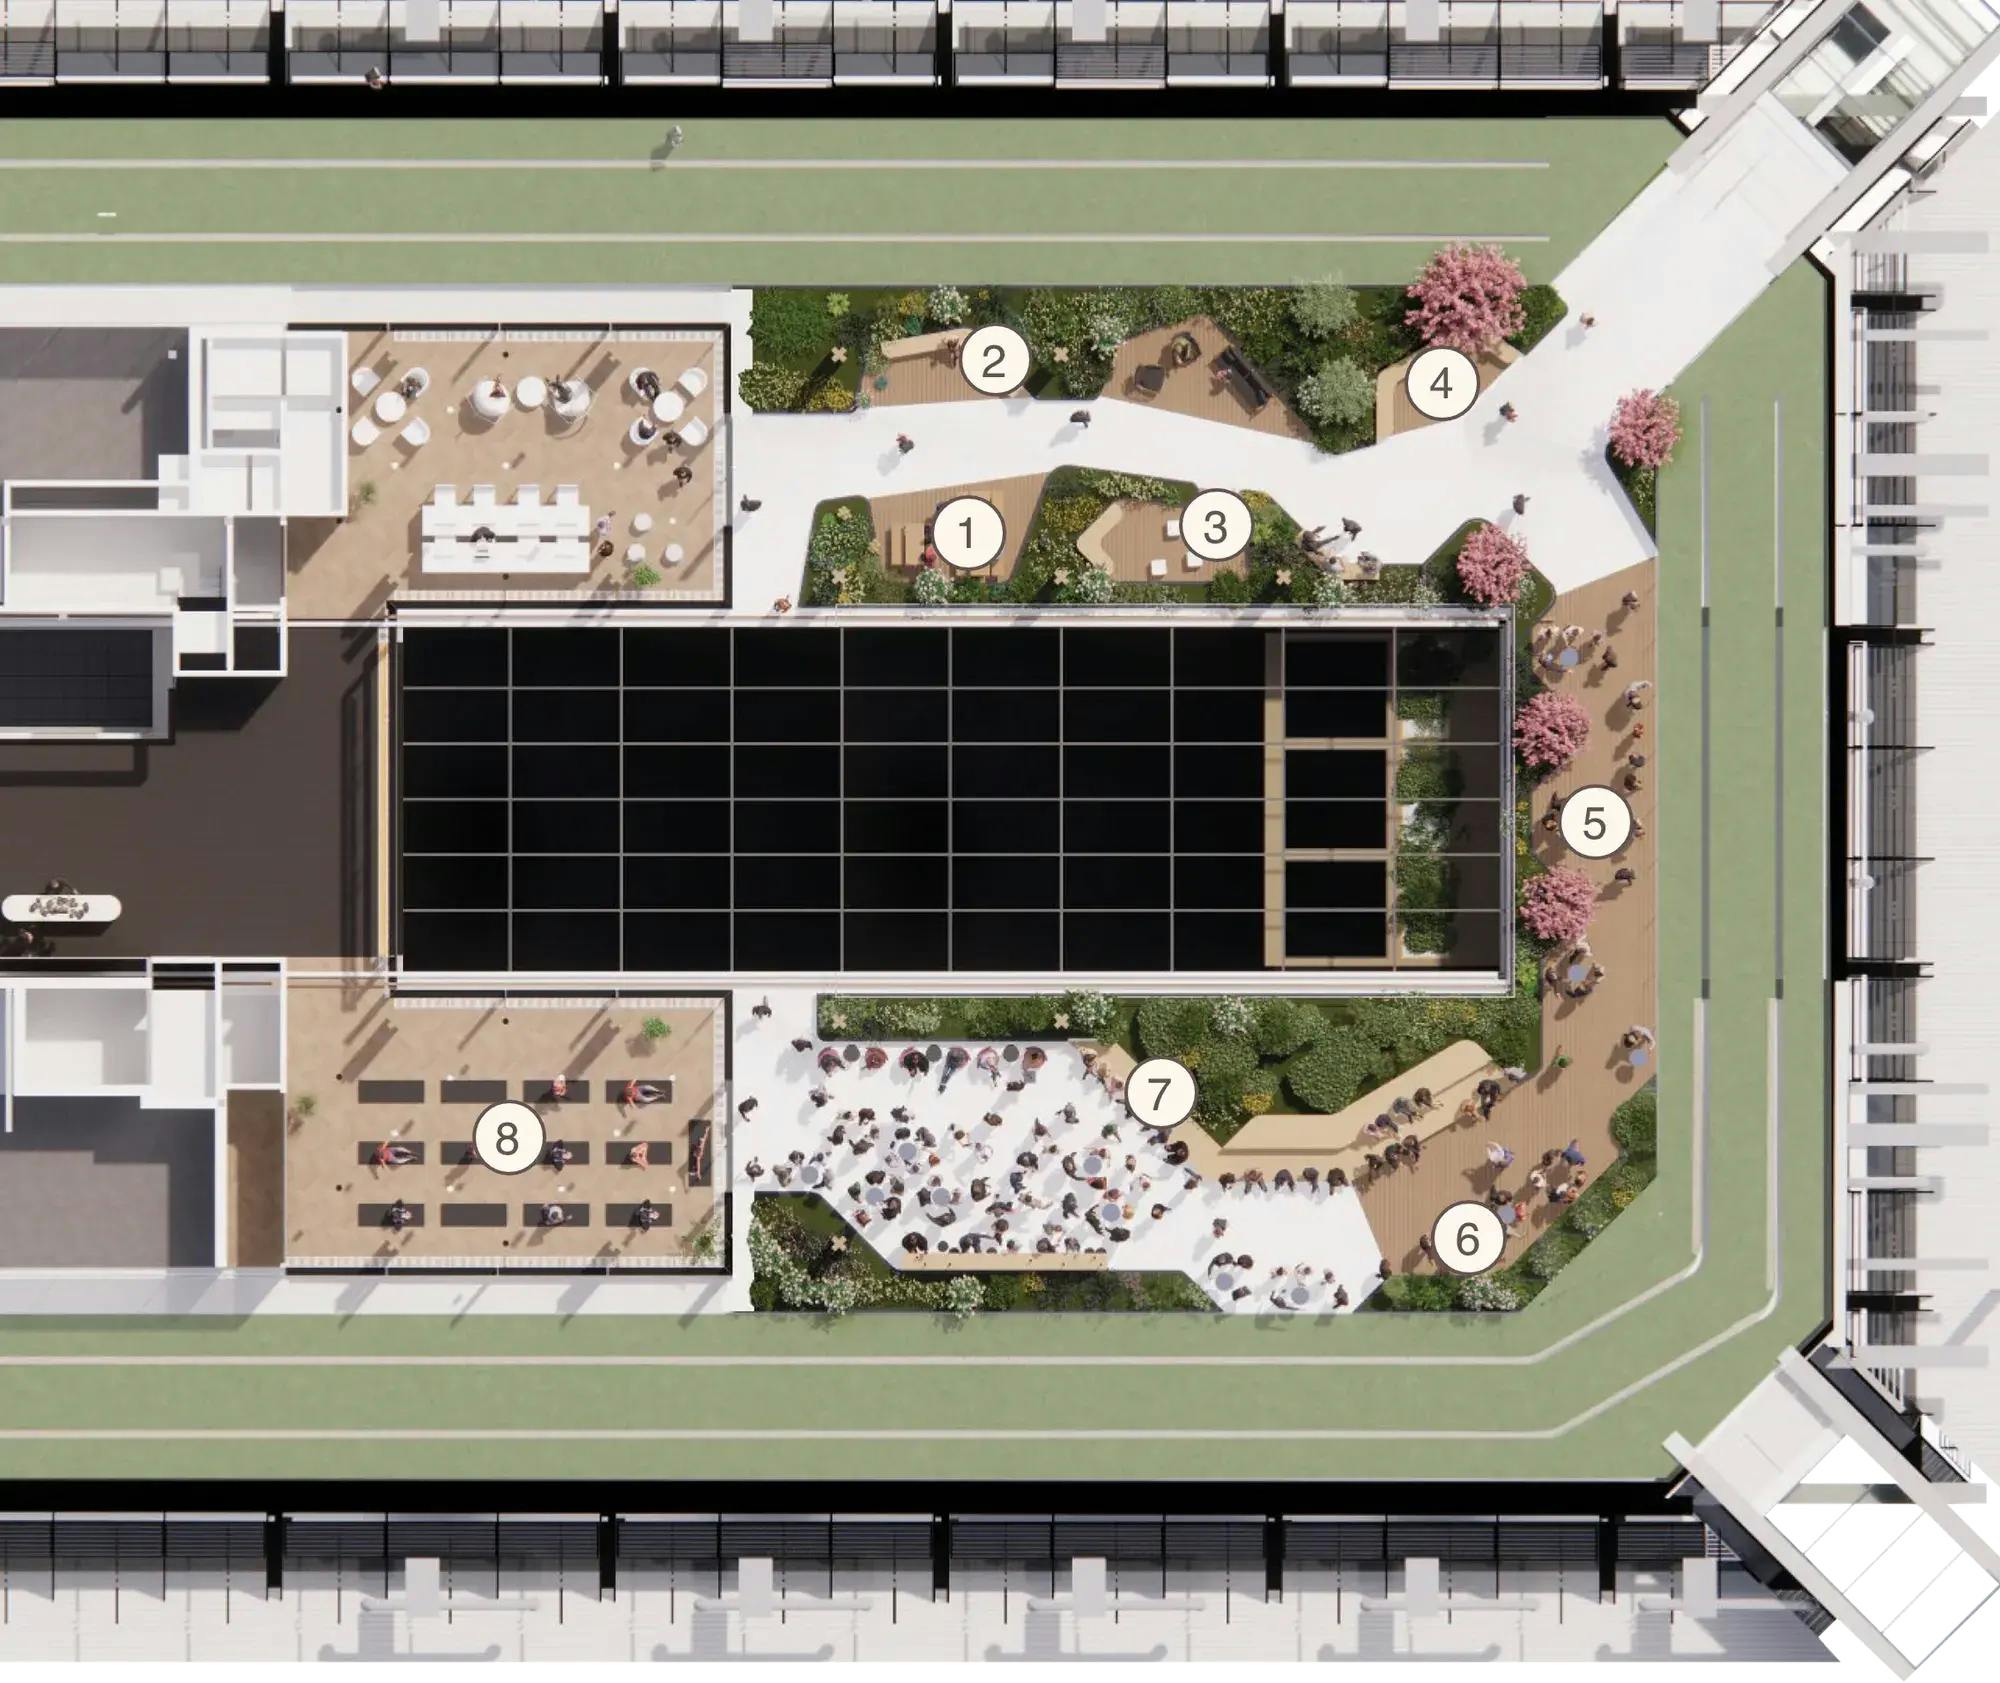 Terrace aerial plan